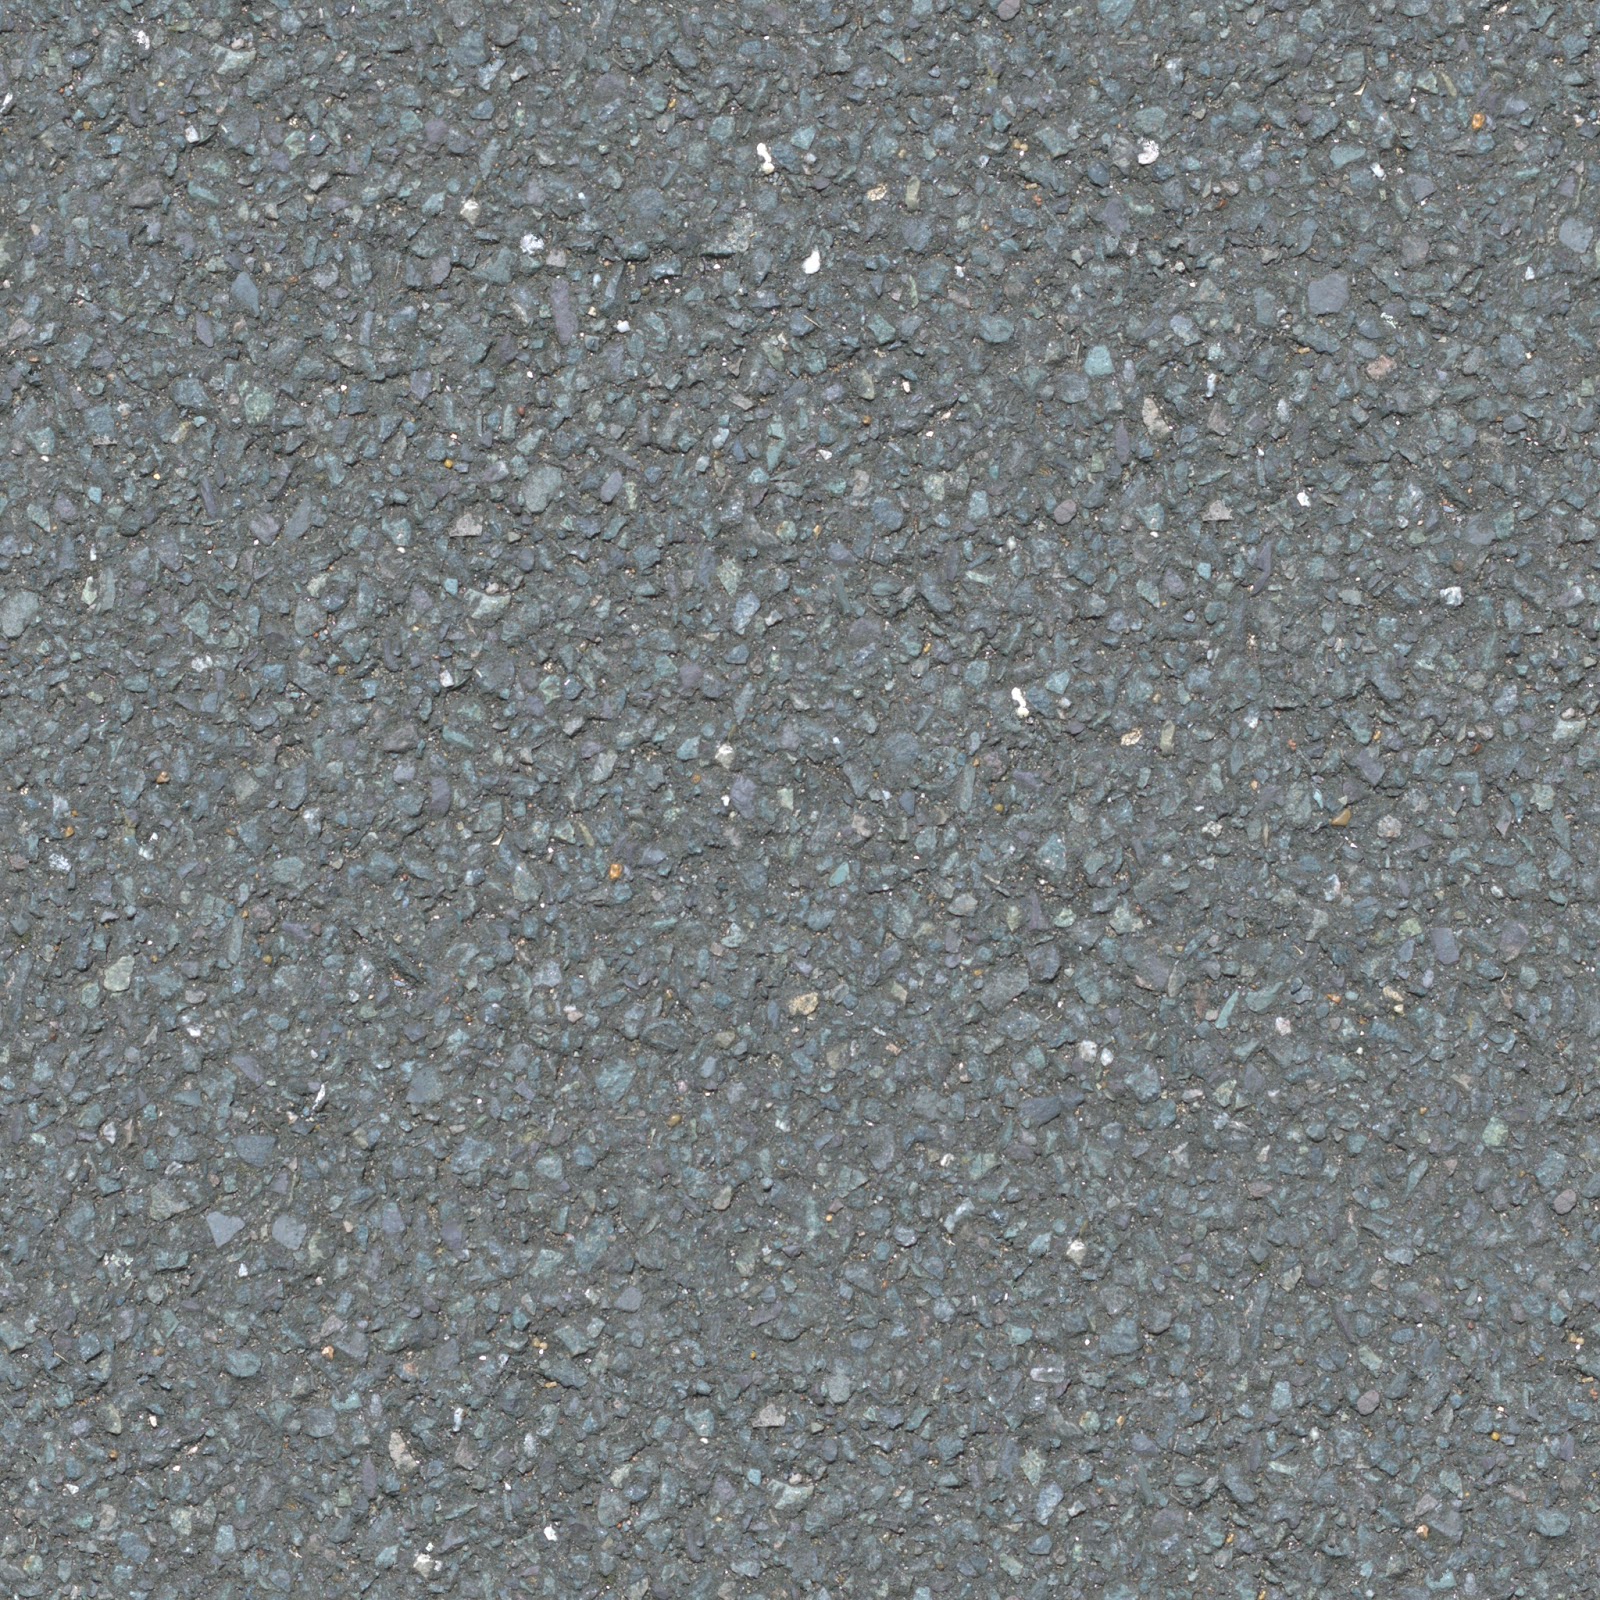 Seamless asphalt tarmac road tar texture ver 2